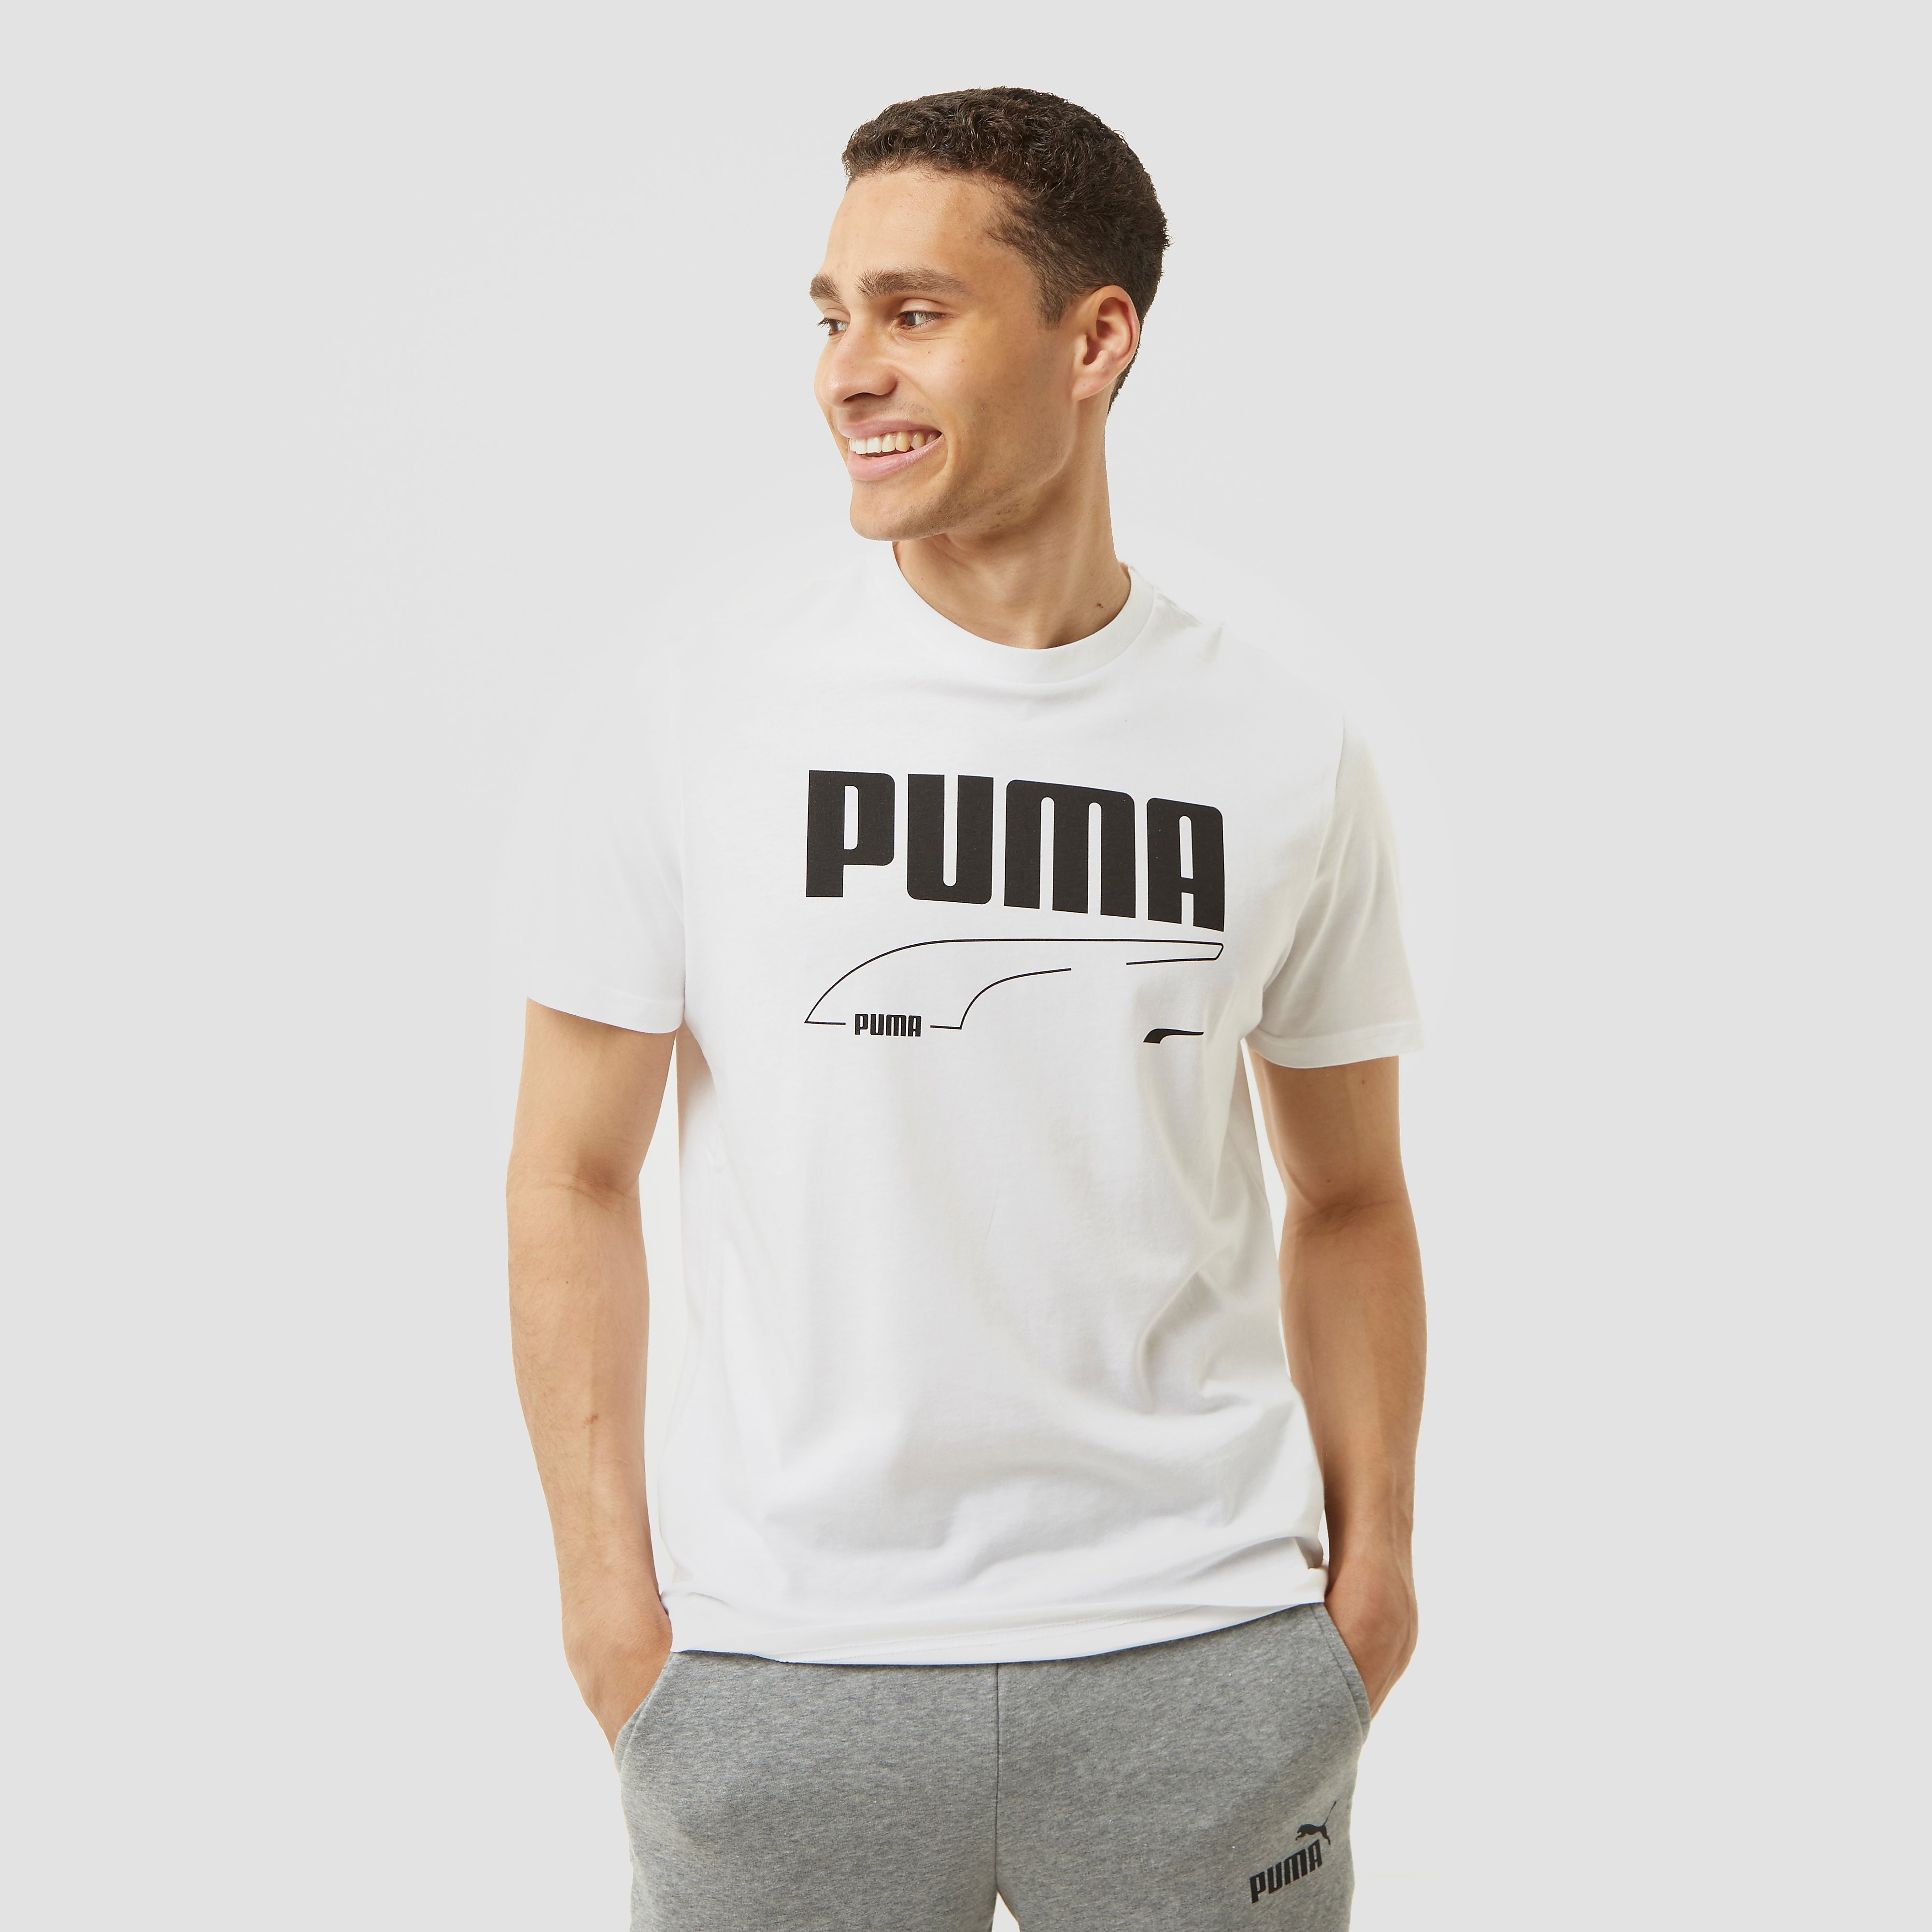 Puma Puma rebel shirt wit heren heren